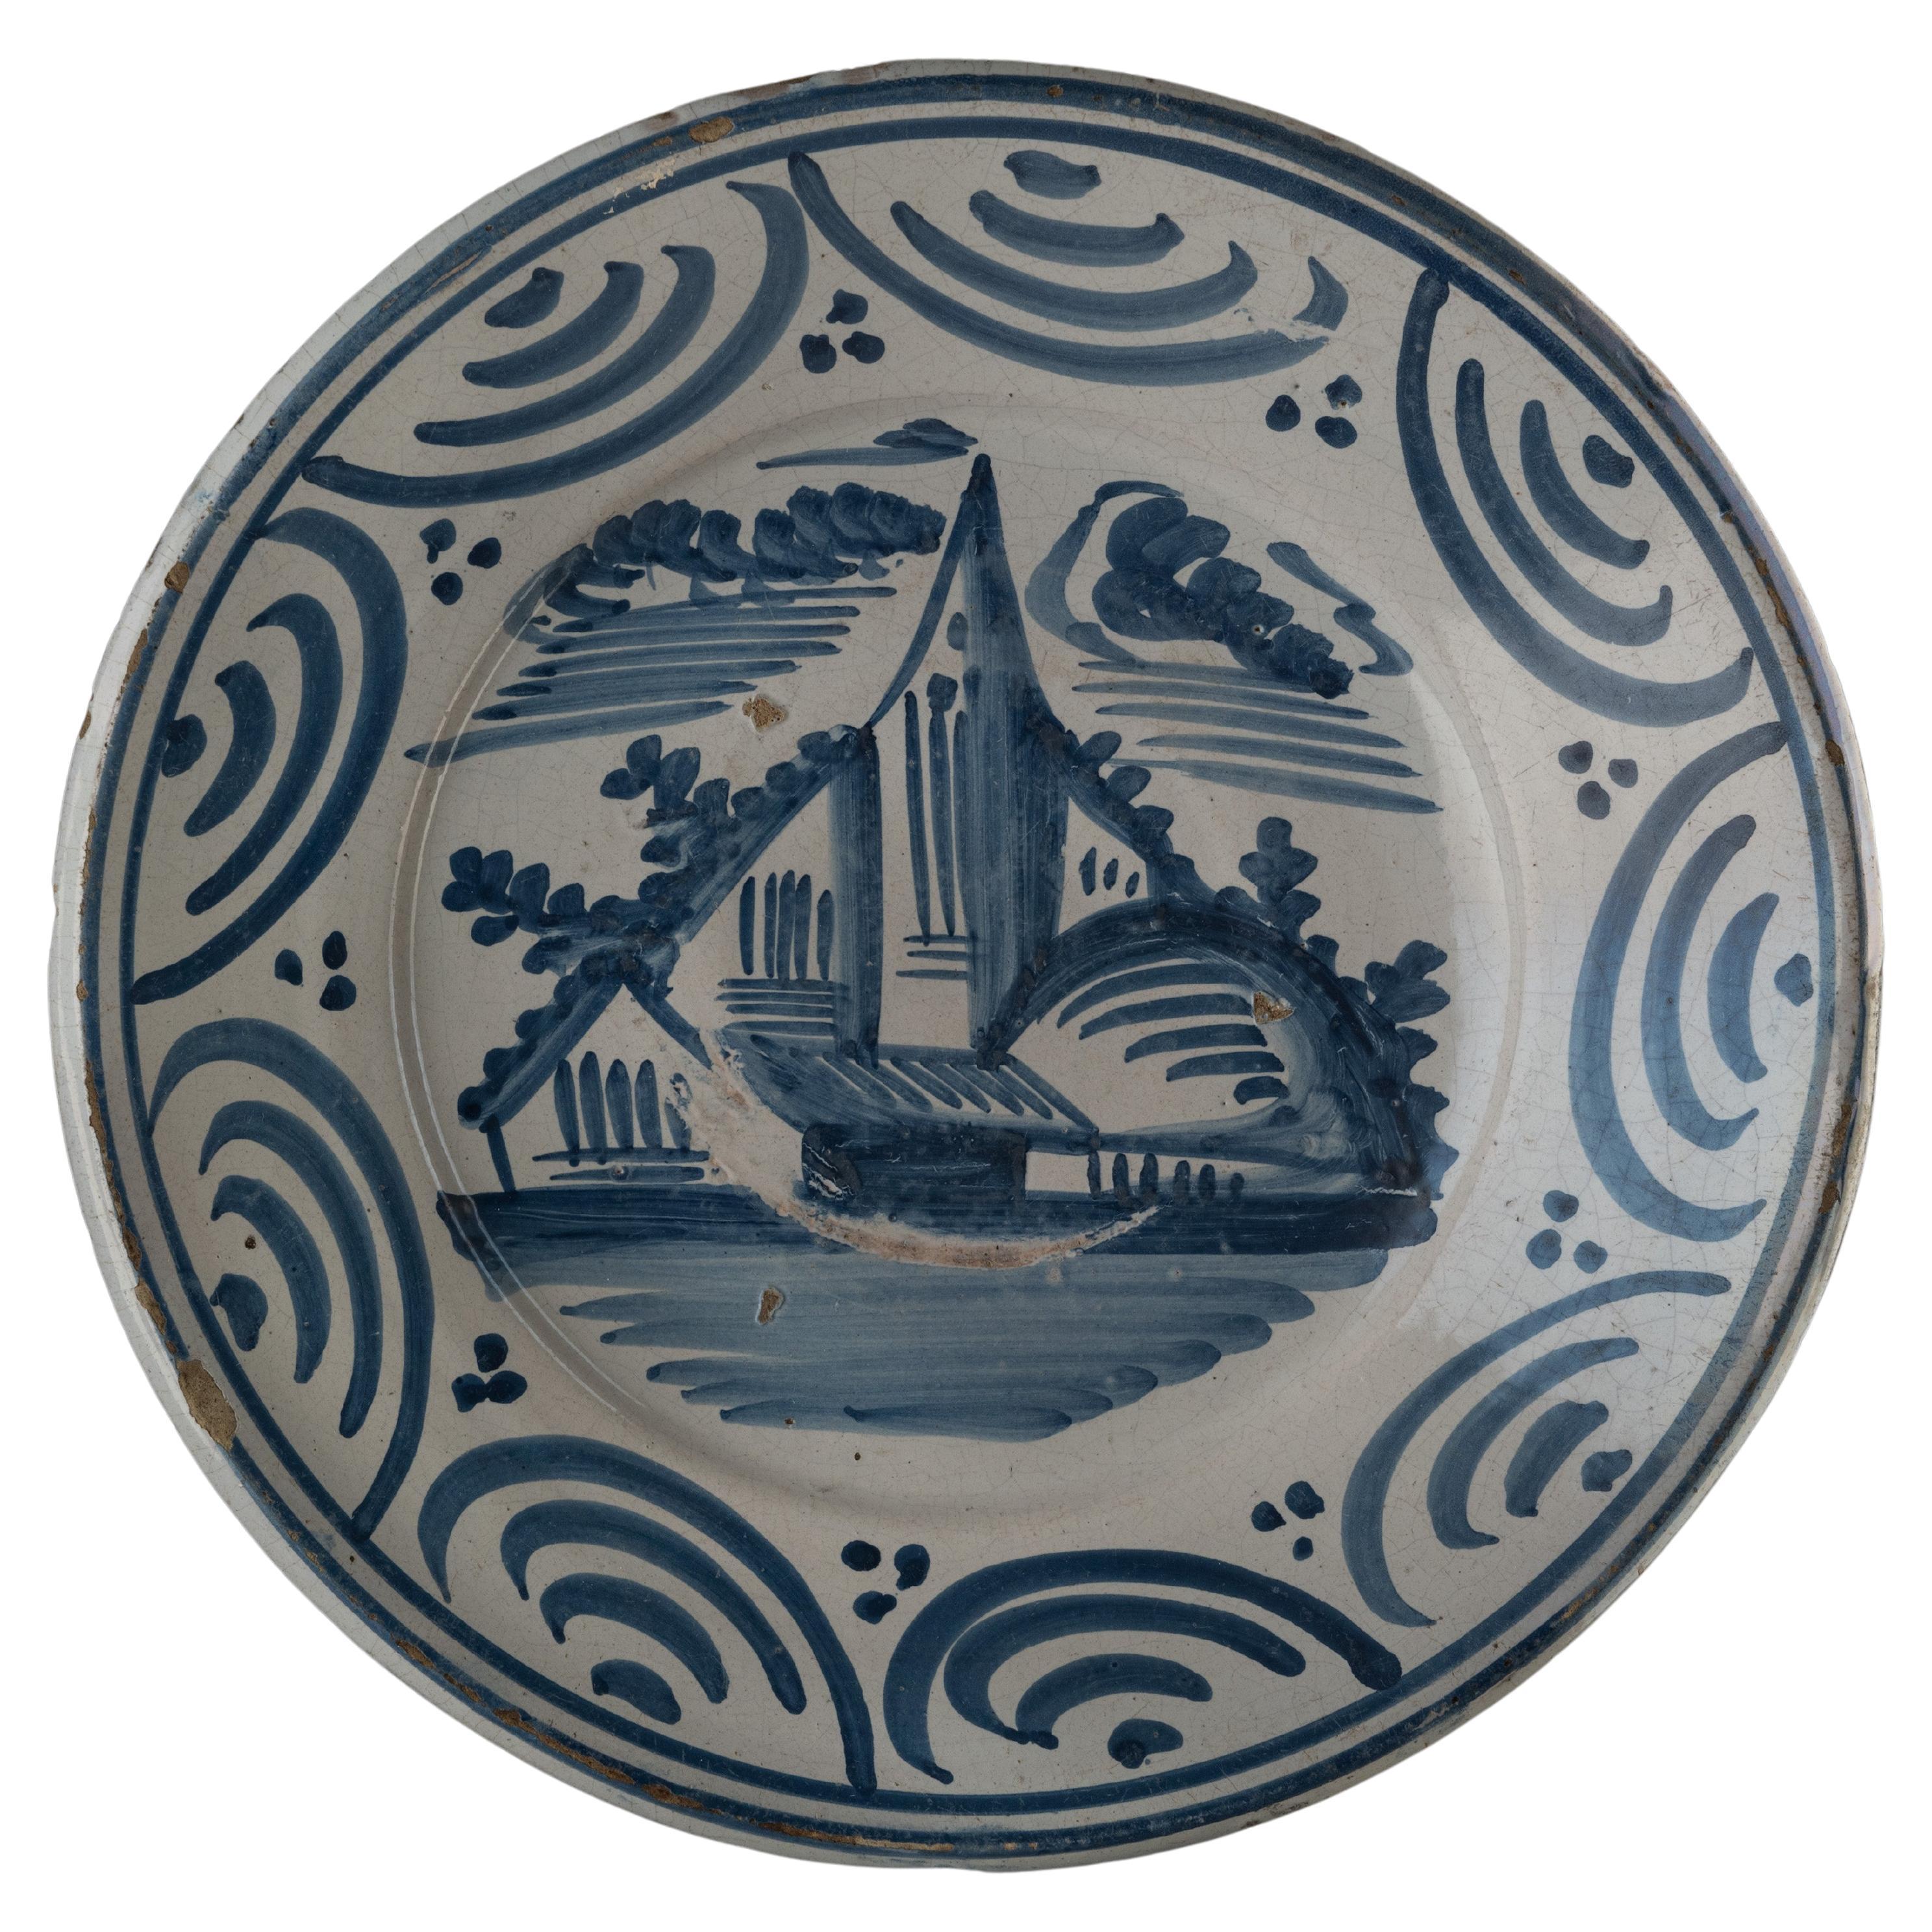 Delfter blau-weiße Landschaftsschale Makkum, Tichelaar-Keramik, 1775-1800